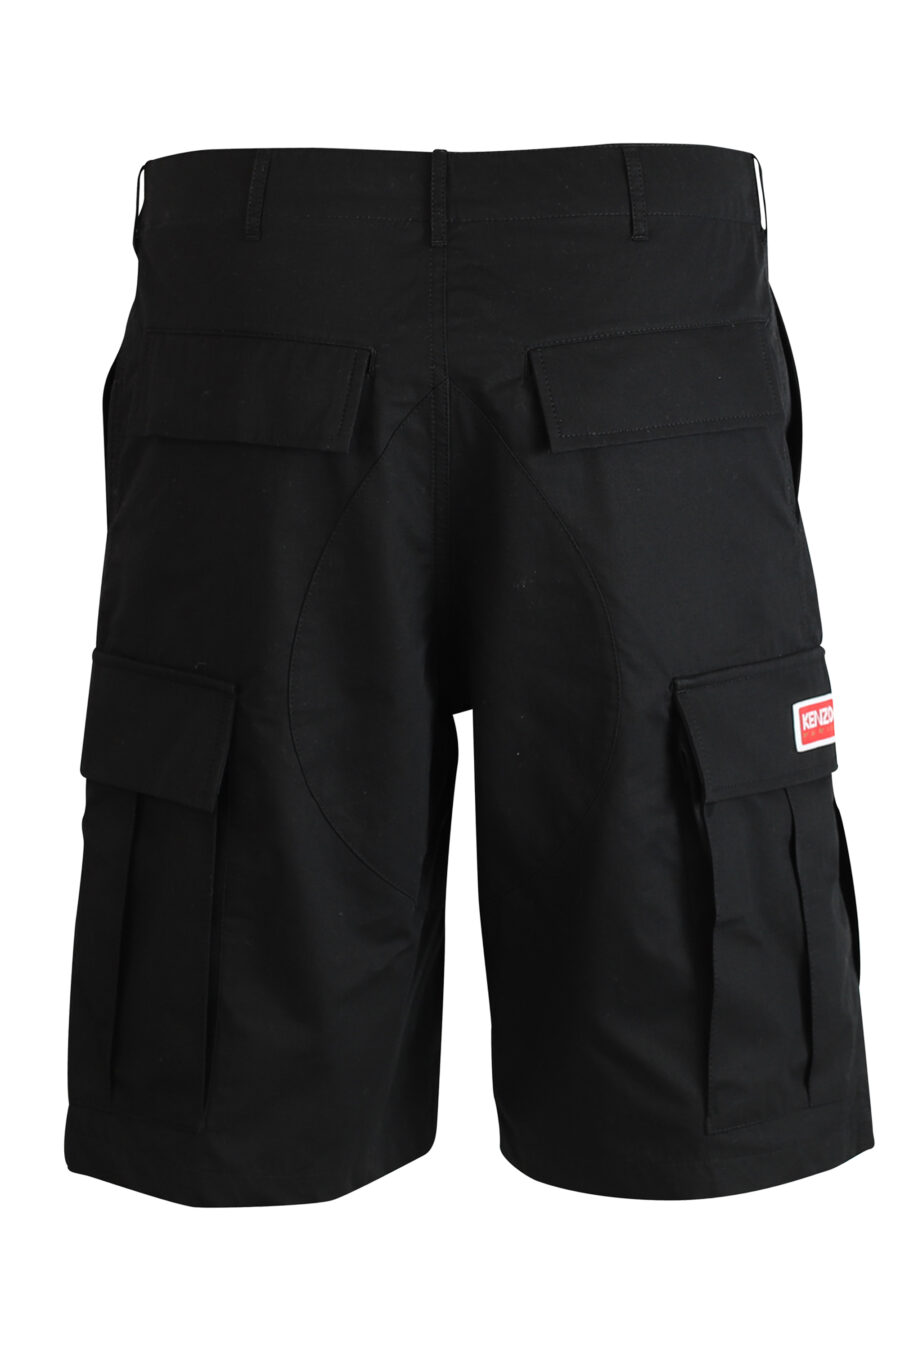 Pantalón negro corto estilo cargo - 3612230420502 3